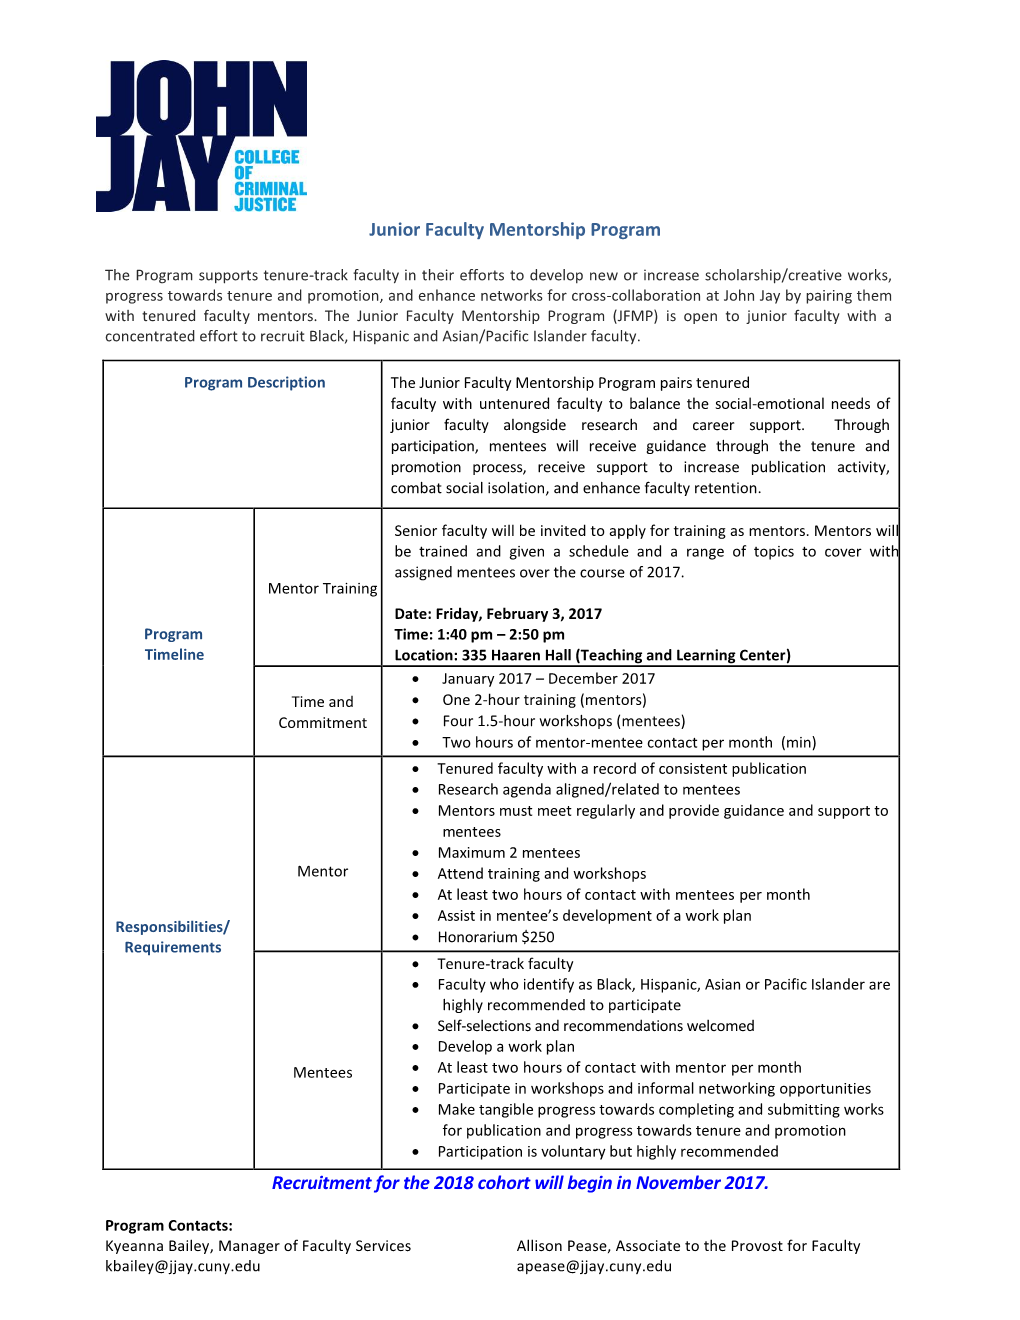 Junior Faculty Mentorship Program Recruitment for the 2018 Cohort Will